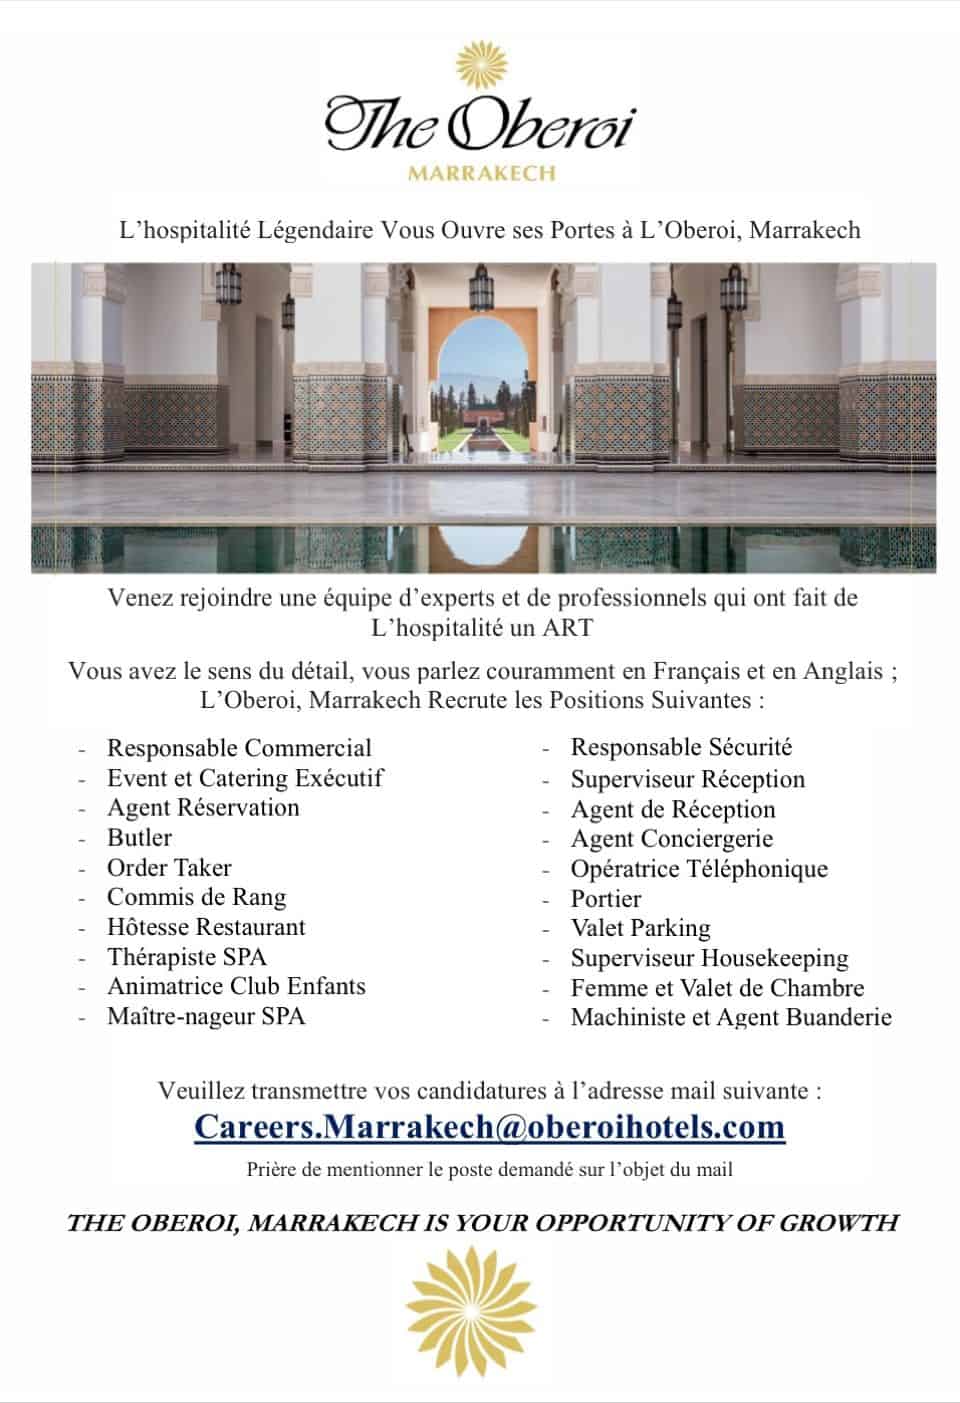 The Oberoi Marrakech recrute Plusieurs Profils